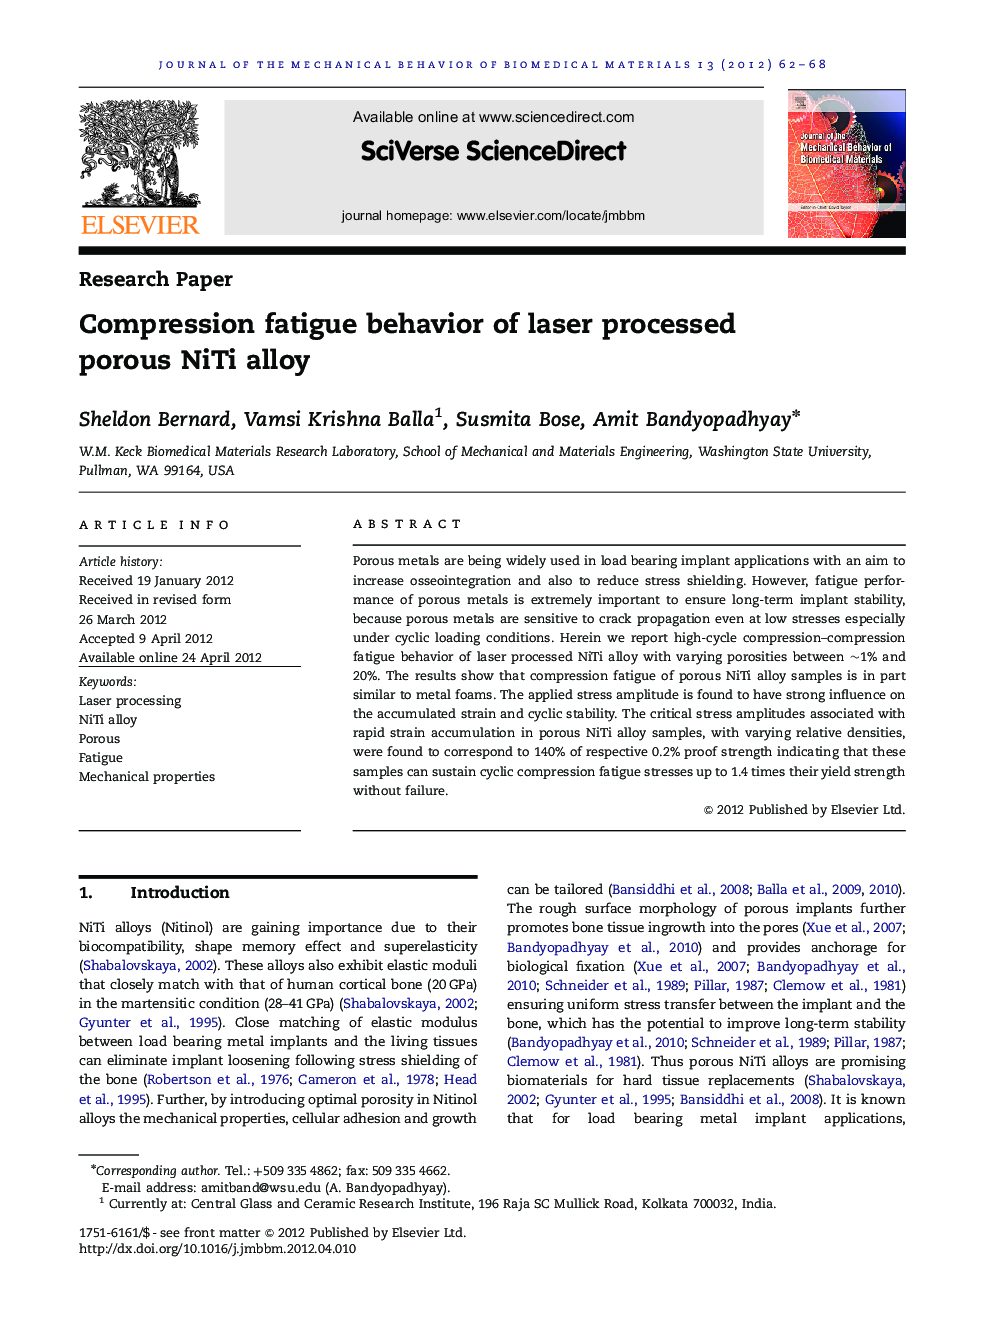 Compression fatigue behavior of laser processed porous NiTi alloy